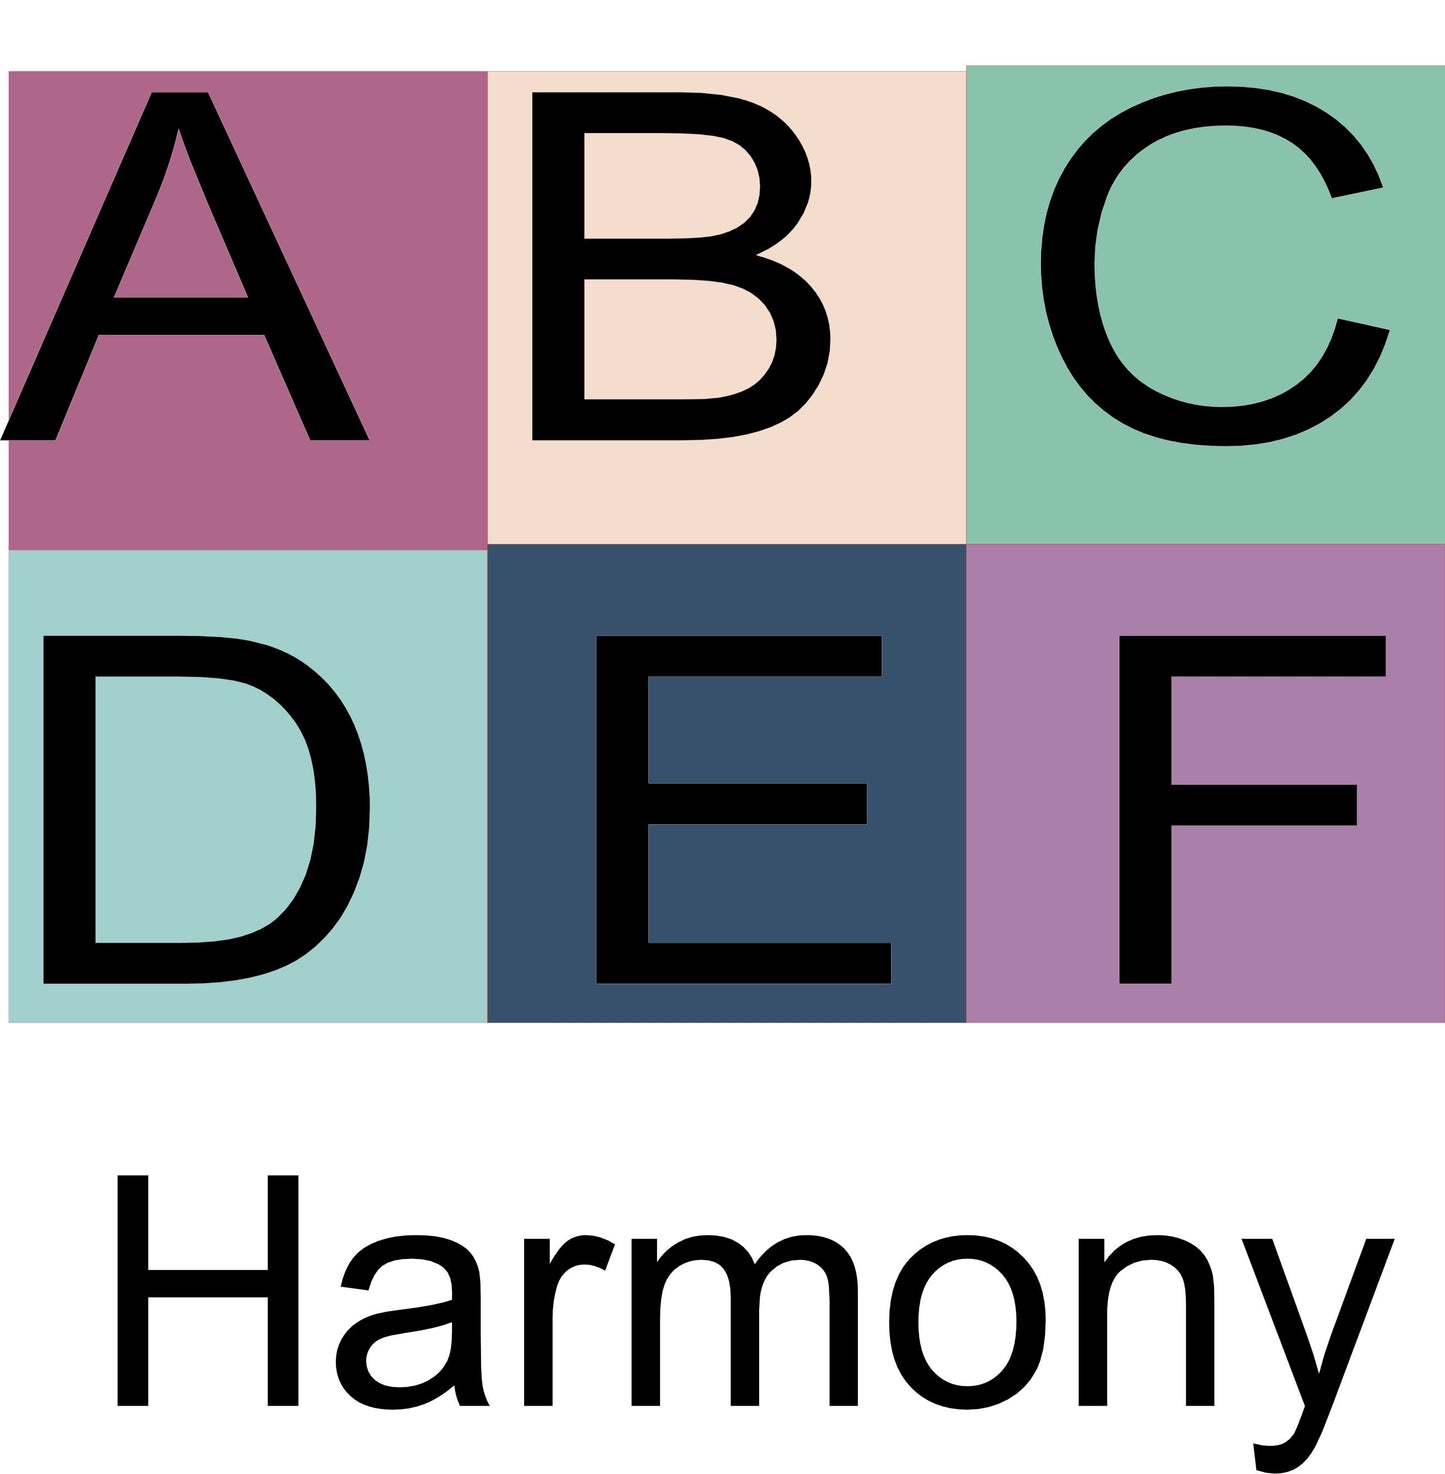 7x9 EC HARMONY PLANNER Name - 7x9 Planner Name Decals - ec colorway Harmony